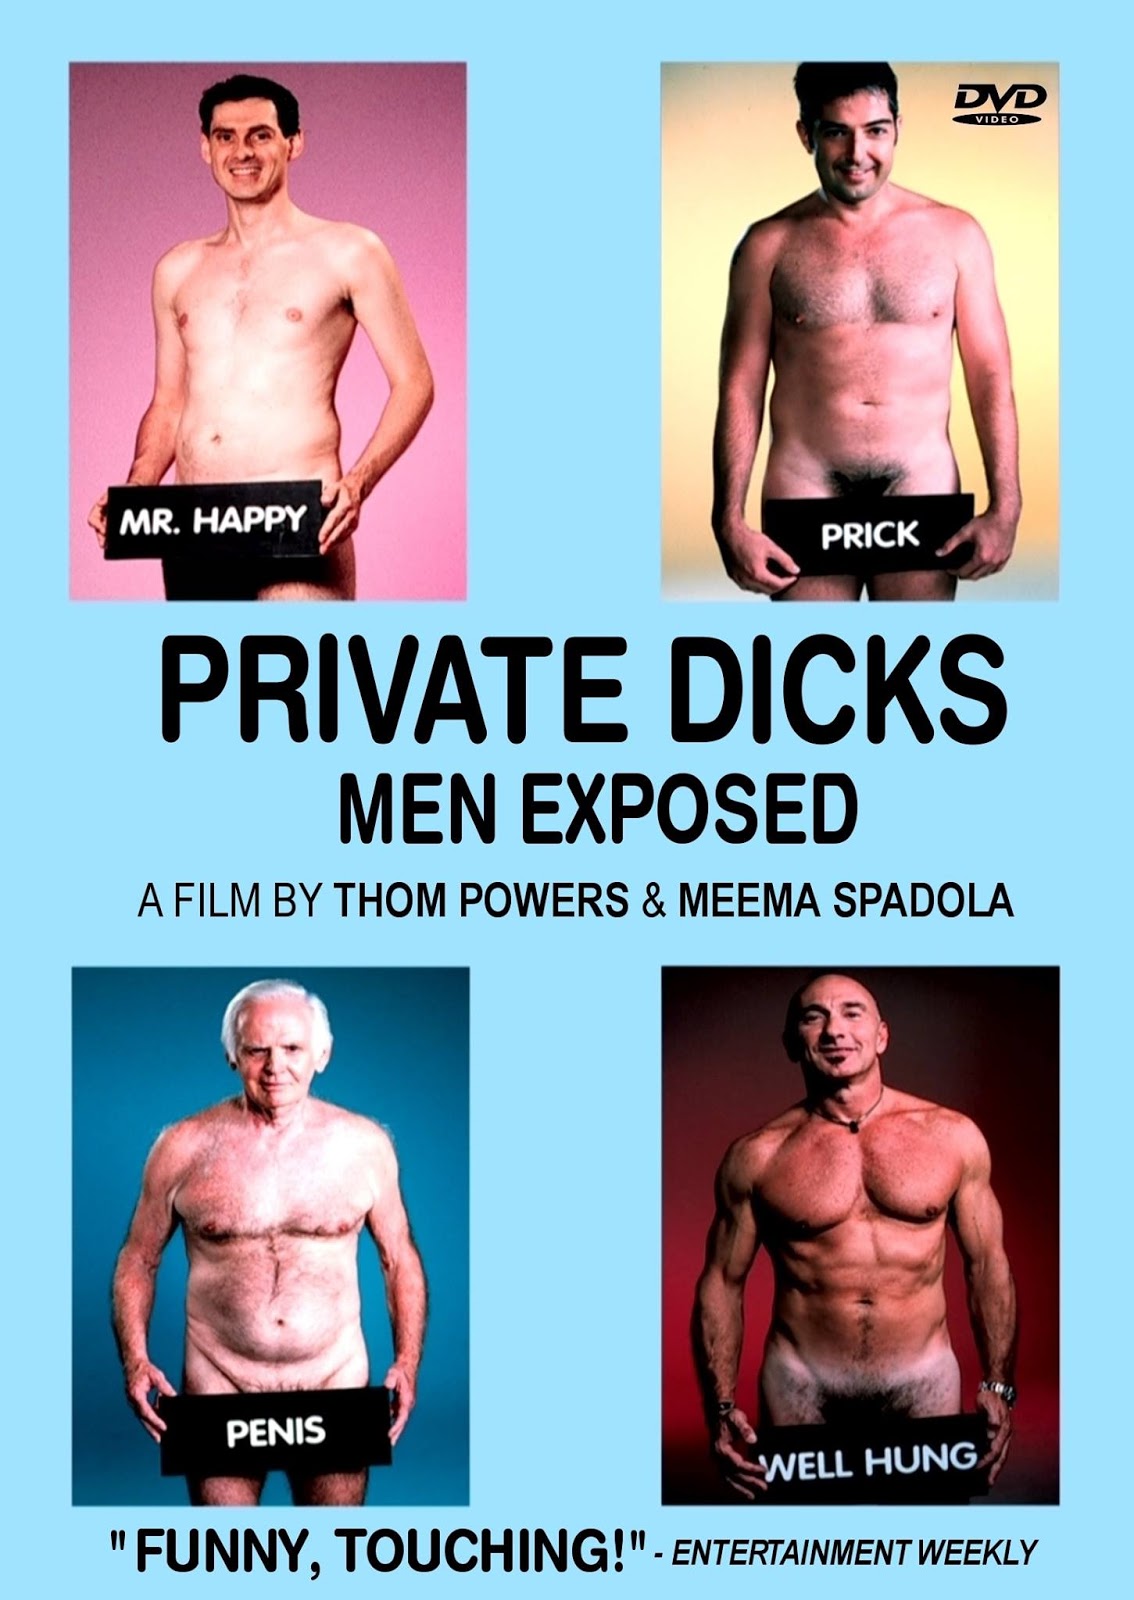 Private dicks: men exposed